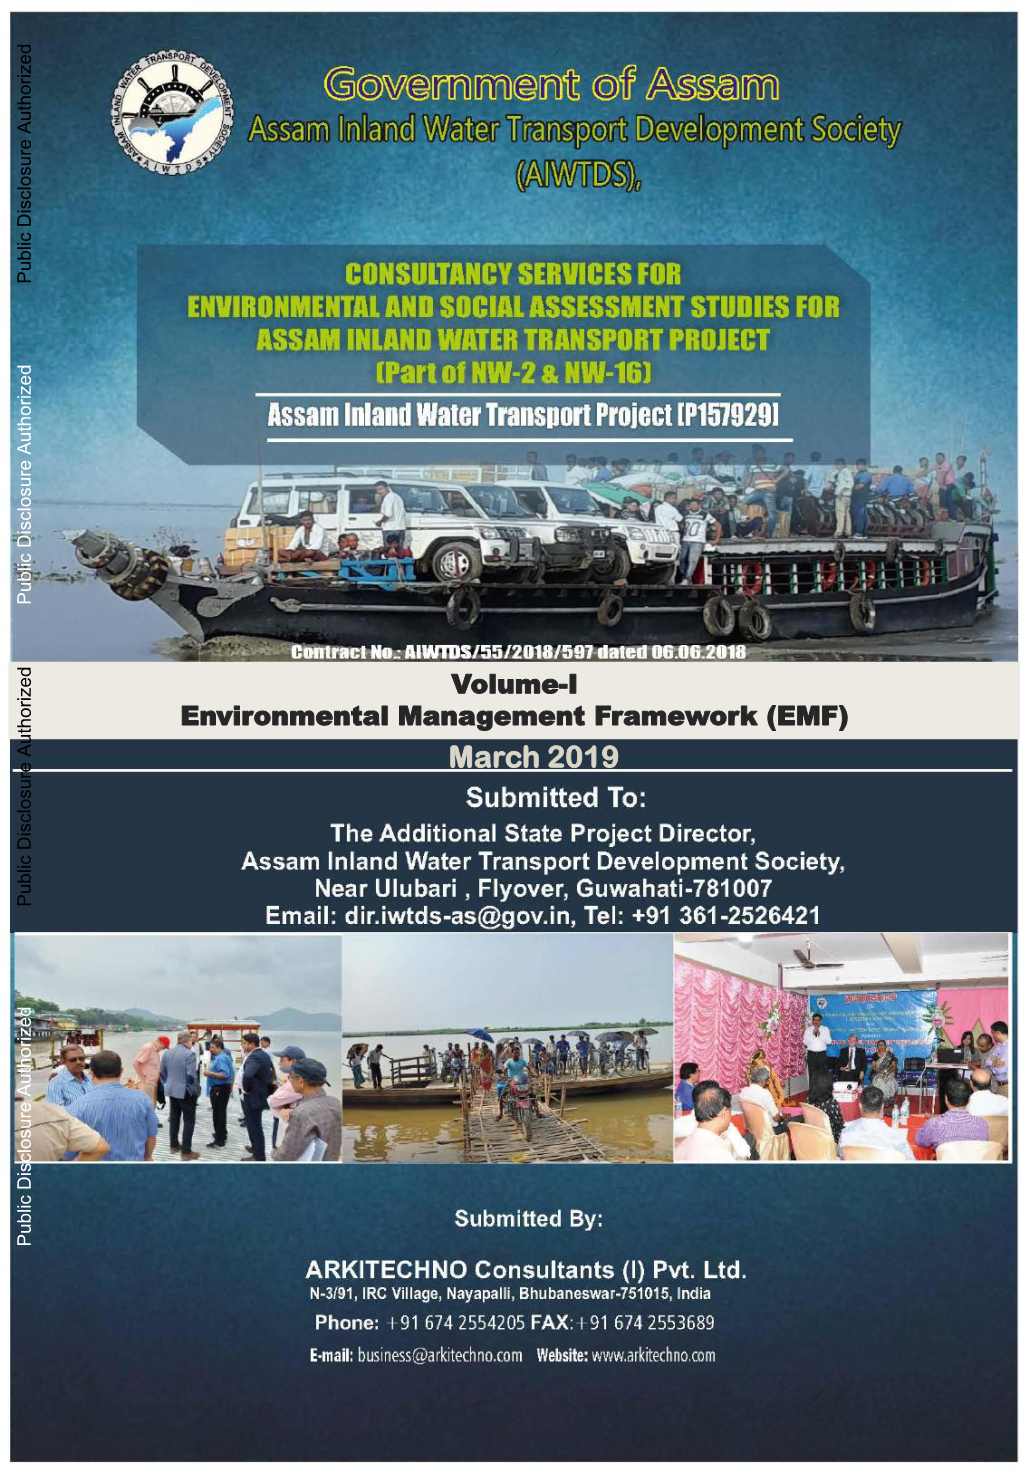 Volume-I Environmental Management Framework (EMF)